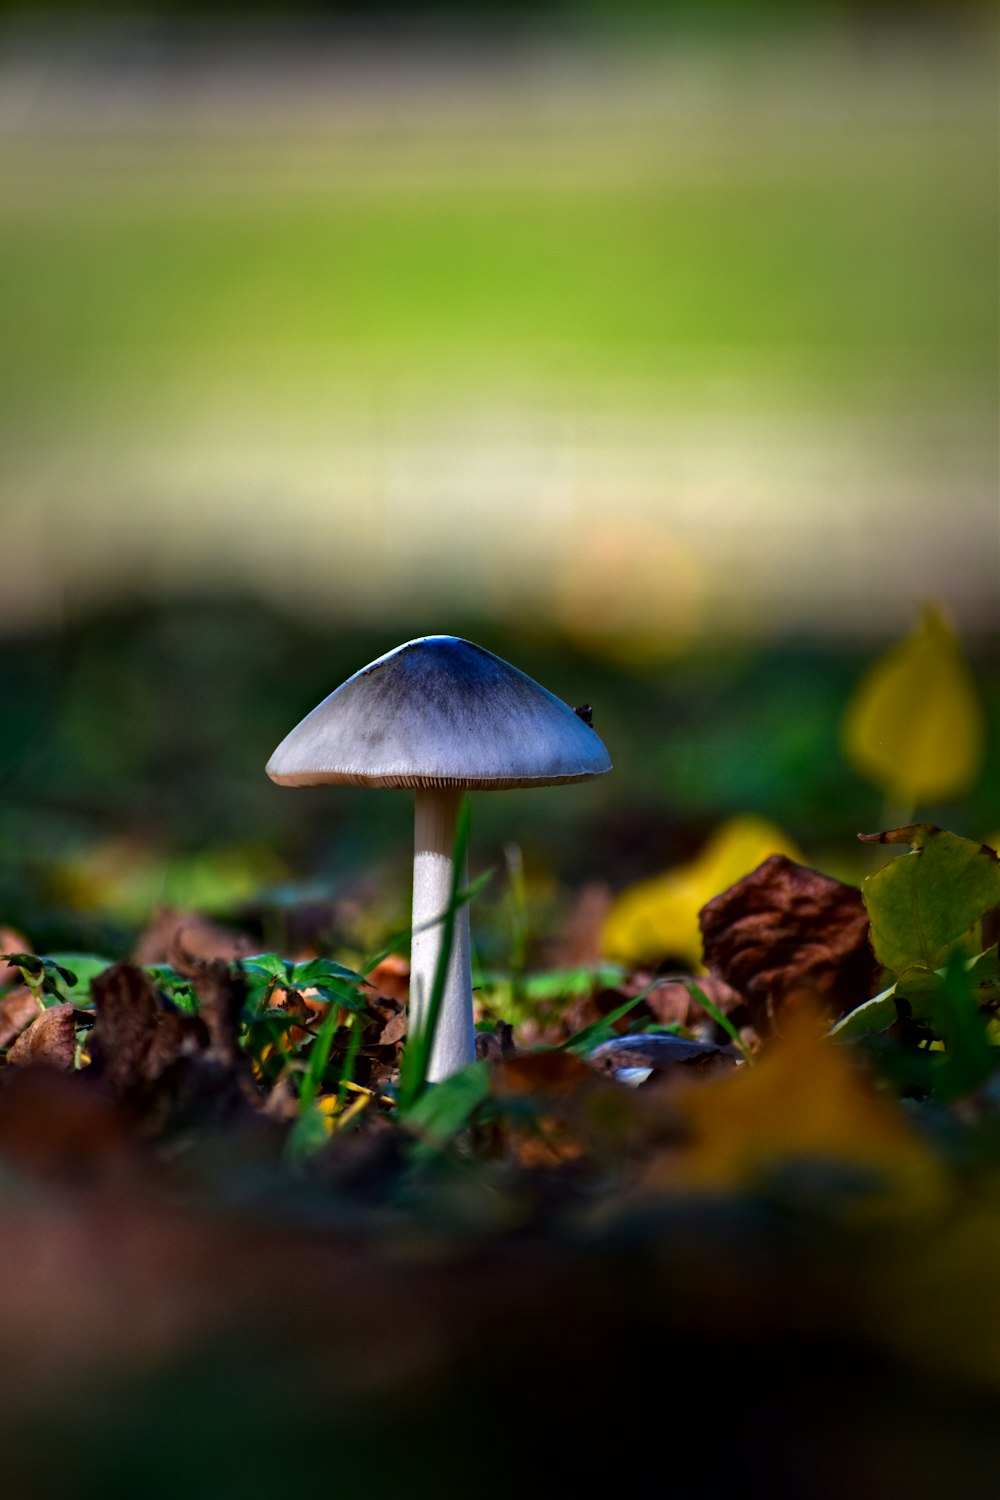 a small blue mushroom sitting on the ground